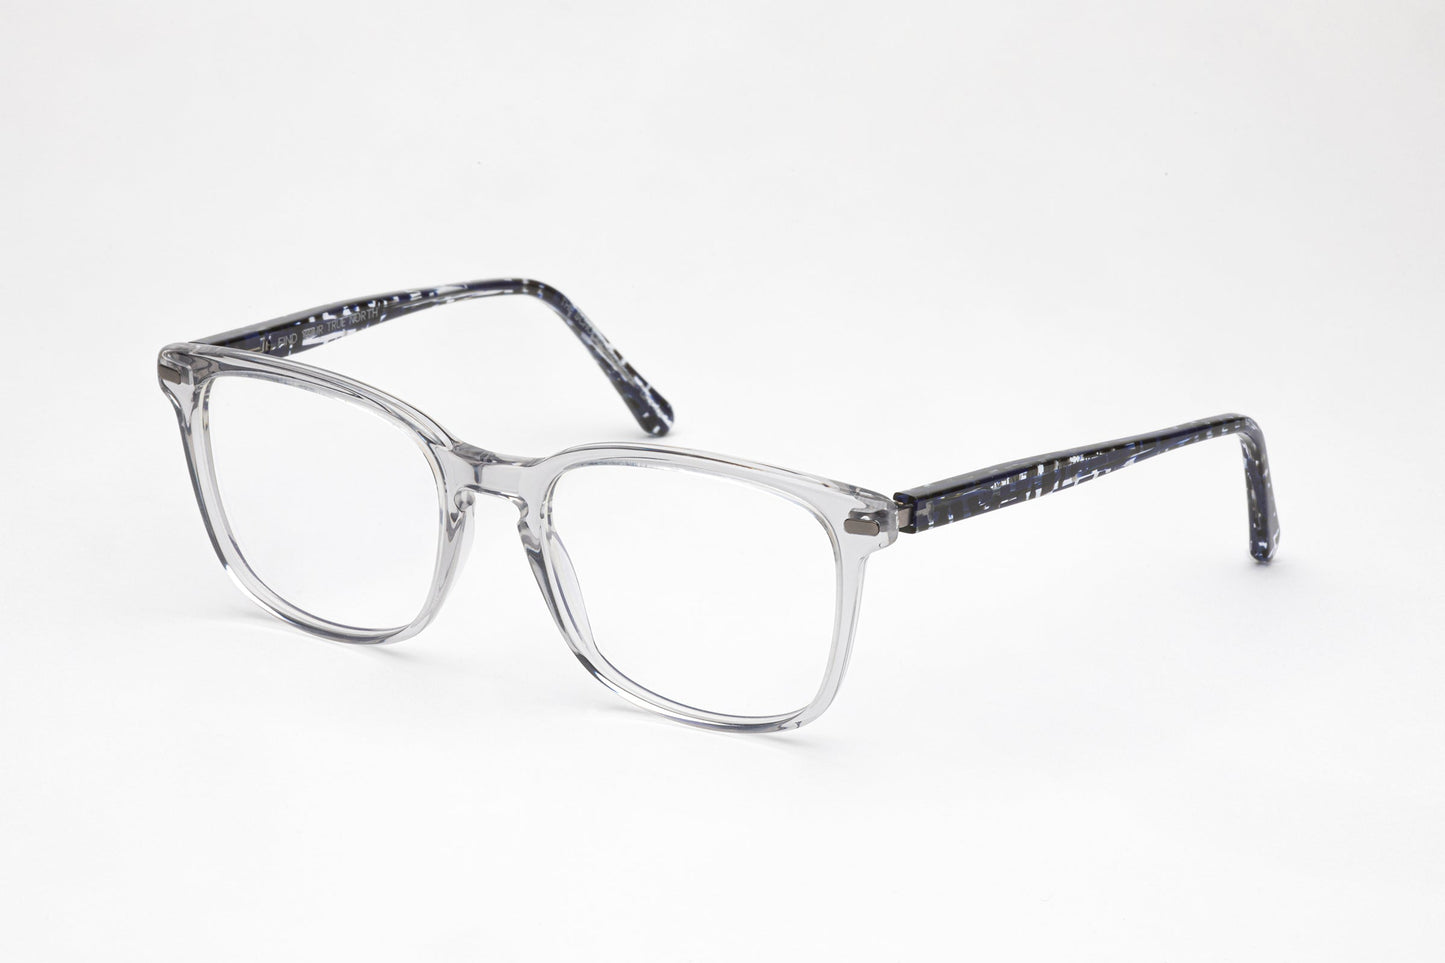 The Scholar 3 - Transparent Glasses for Low Nose Bridge | Azimuth Eyewear